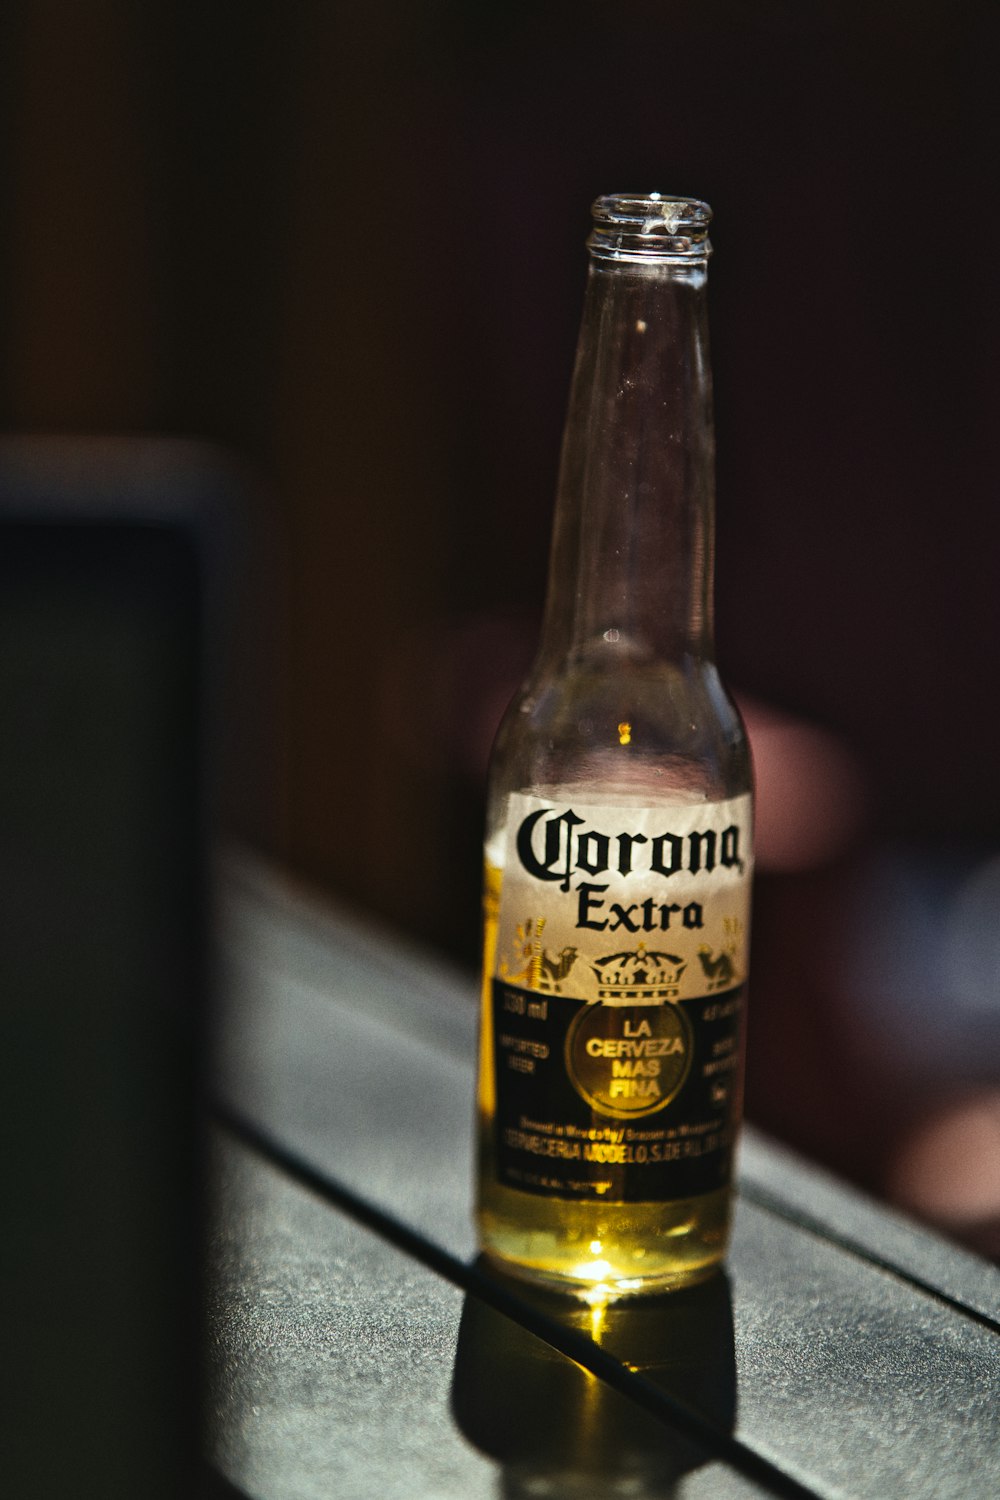 corona extra beer bottle on gray table